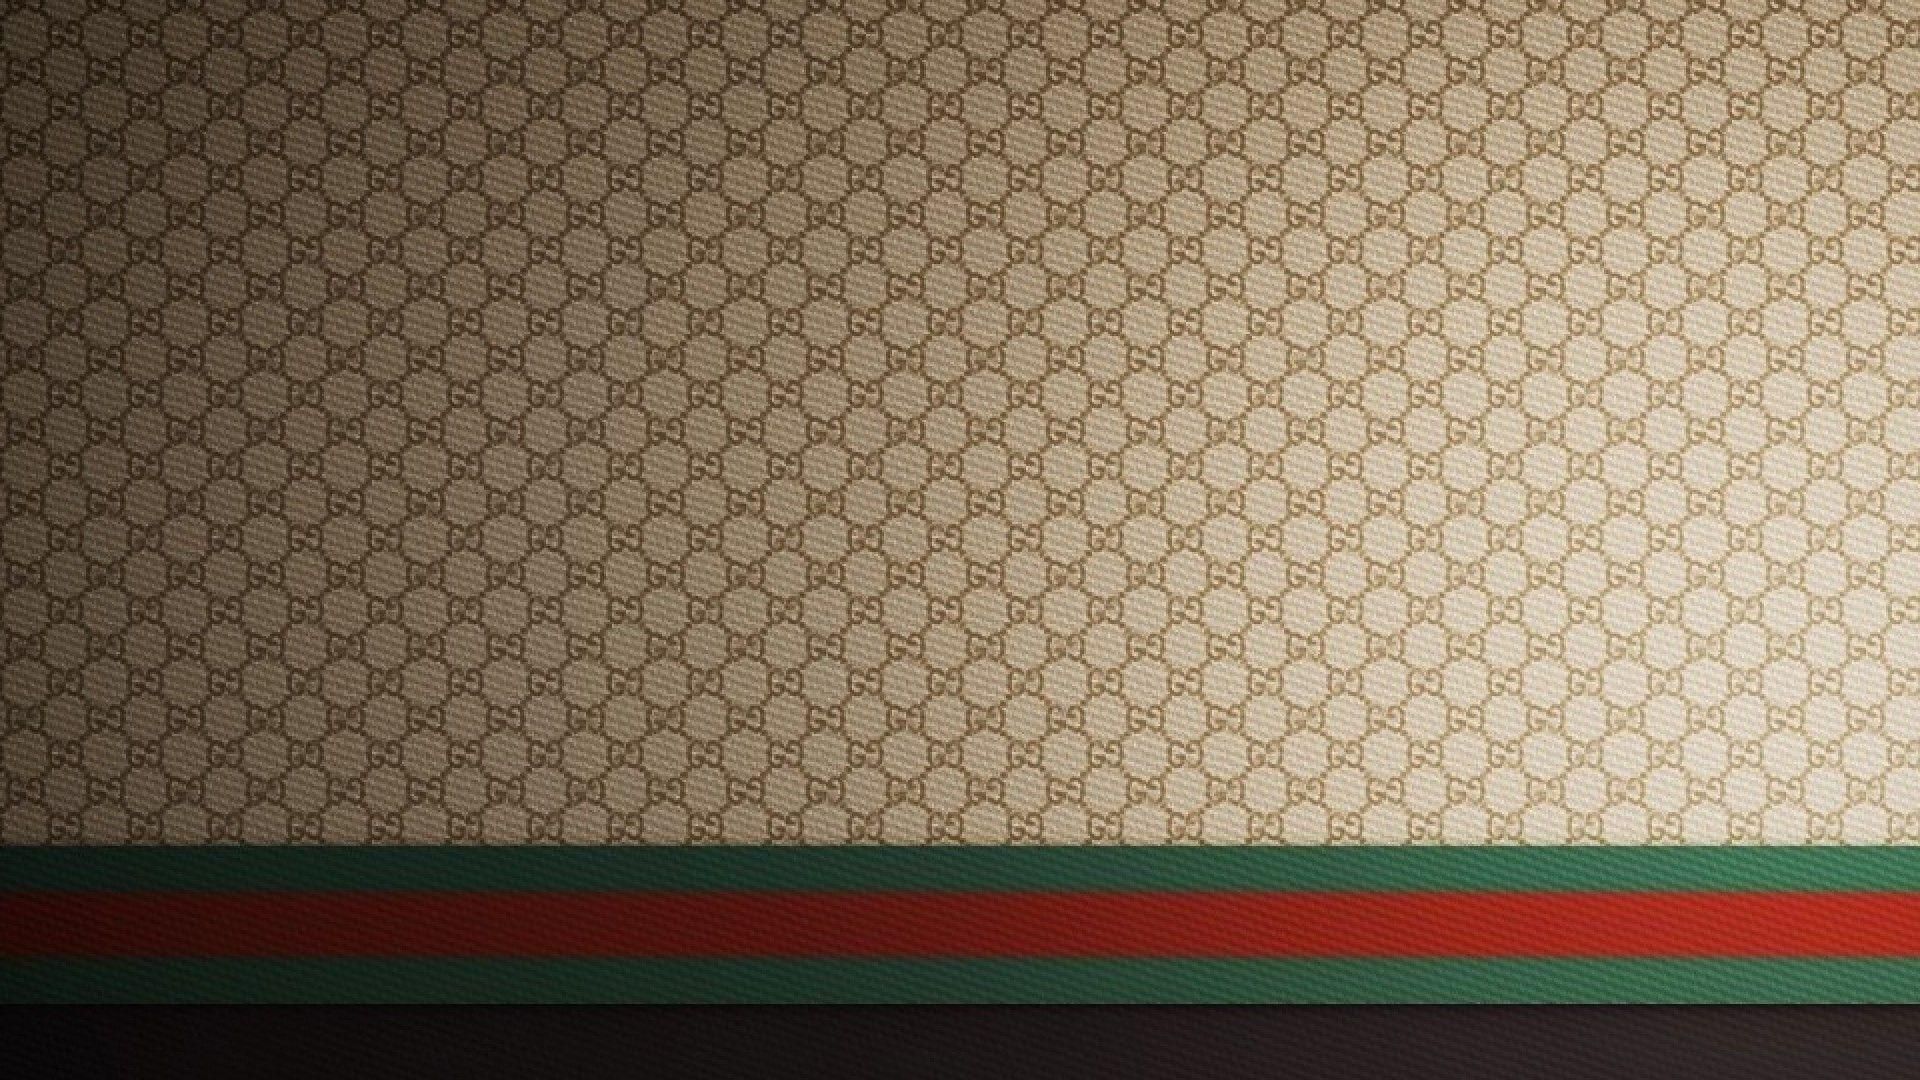 Gucci Desktop Wallpapers